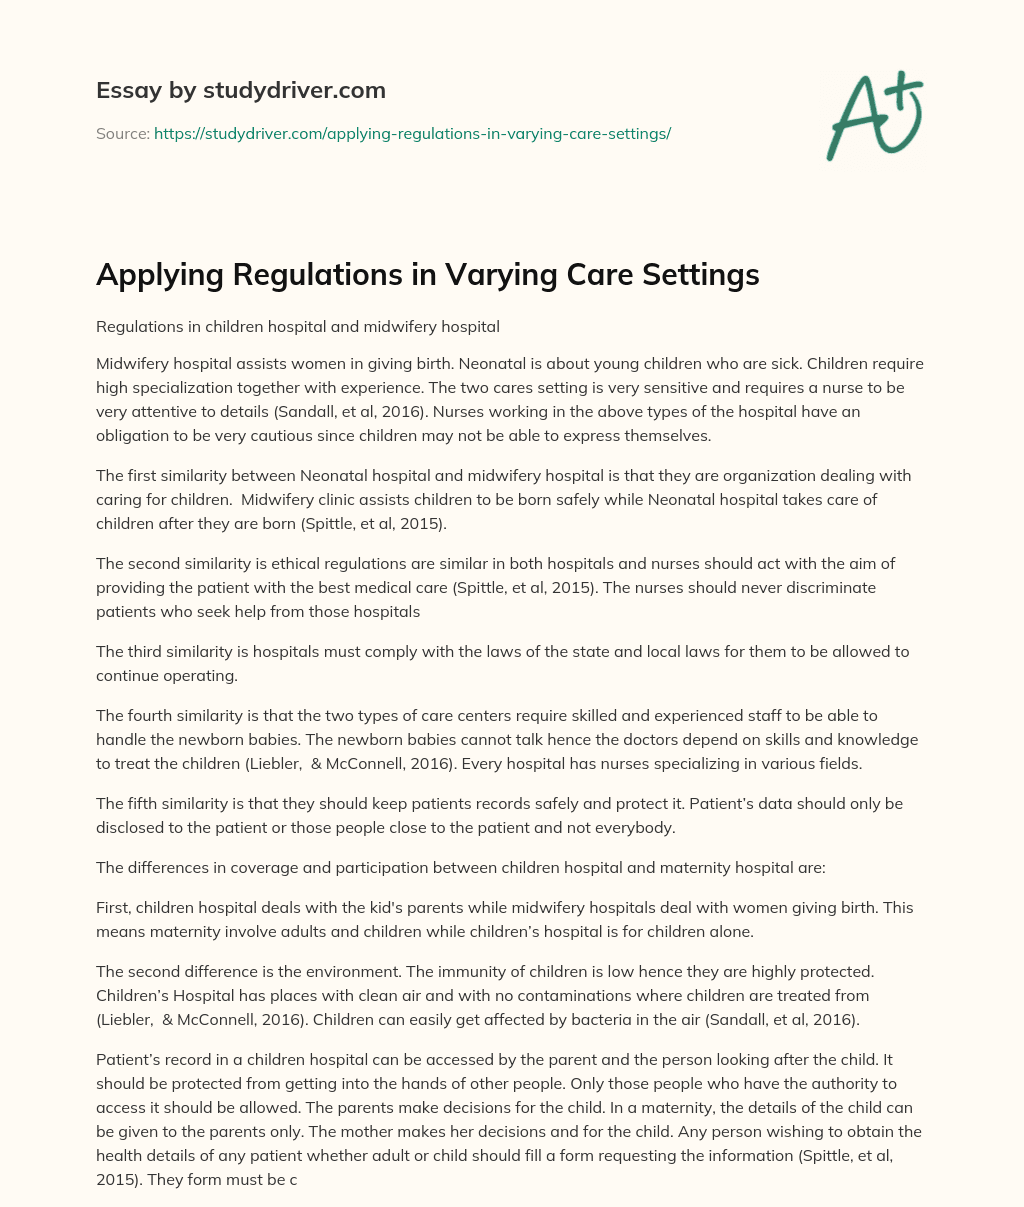 Applying Regulations in Varying Care Settings essay